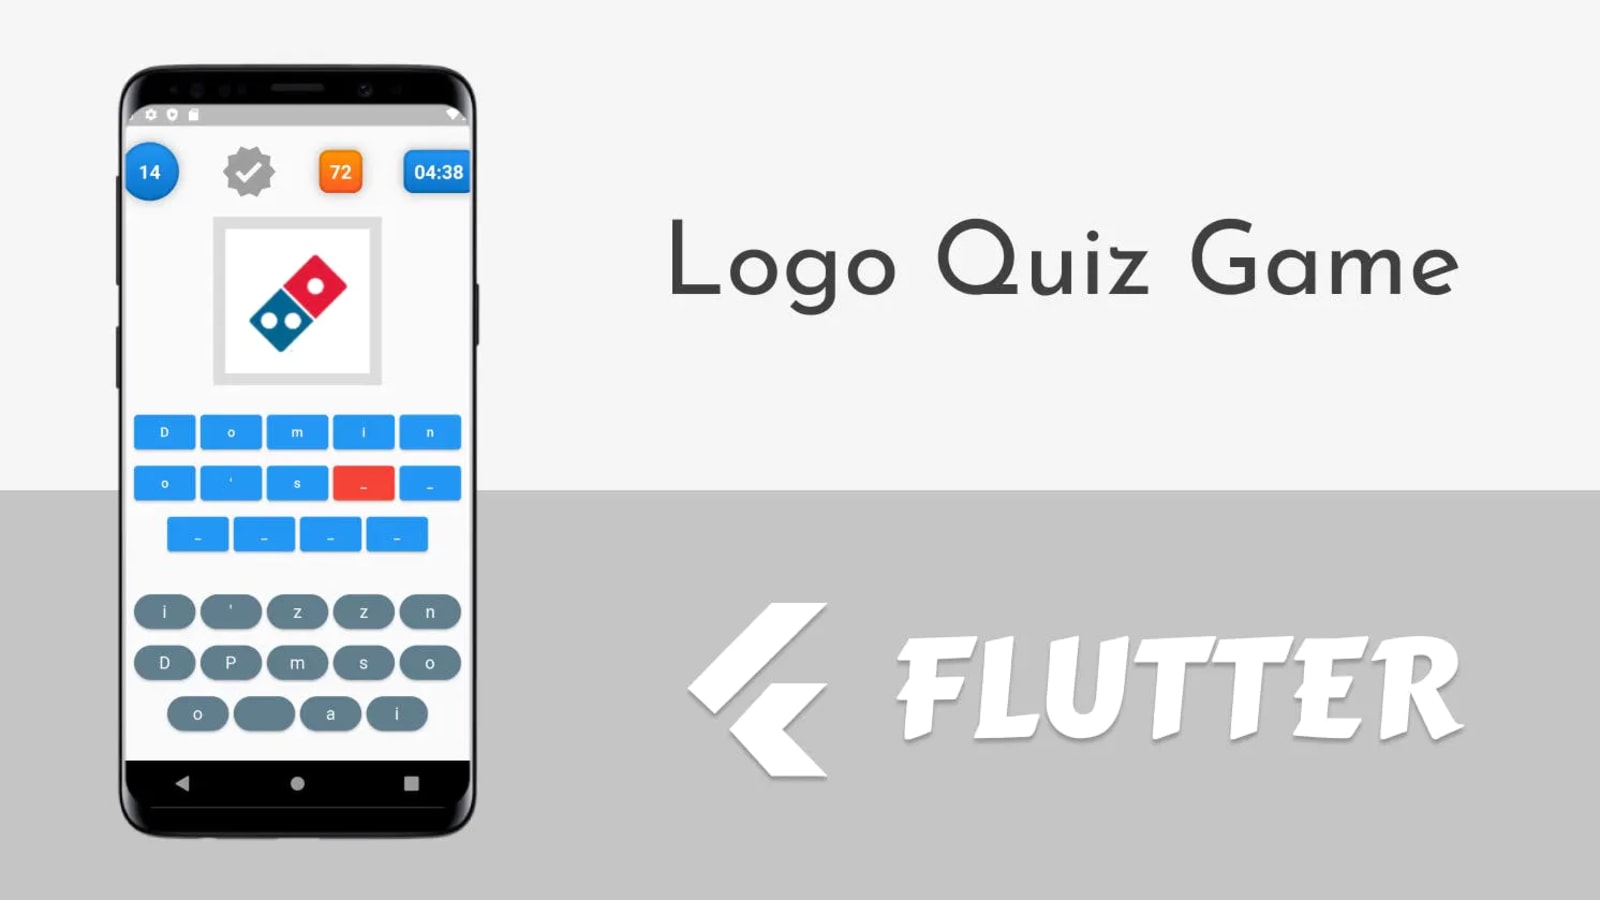 The Ultimate Logo Quiz Game Flutter Flutter Full Applications